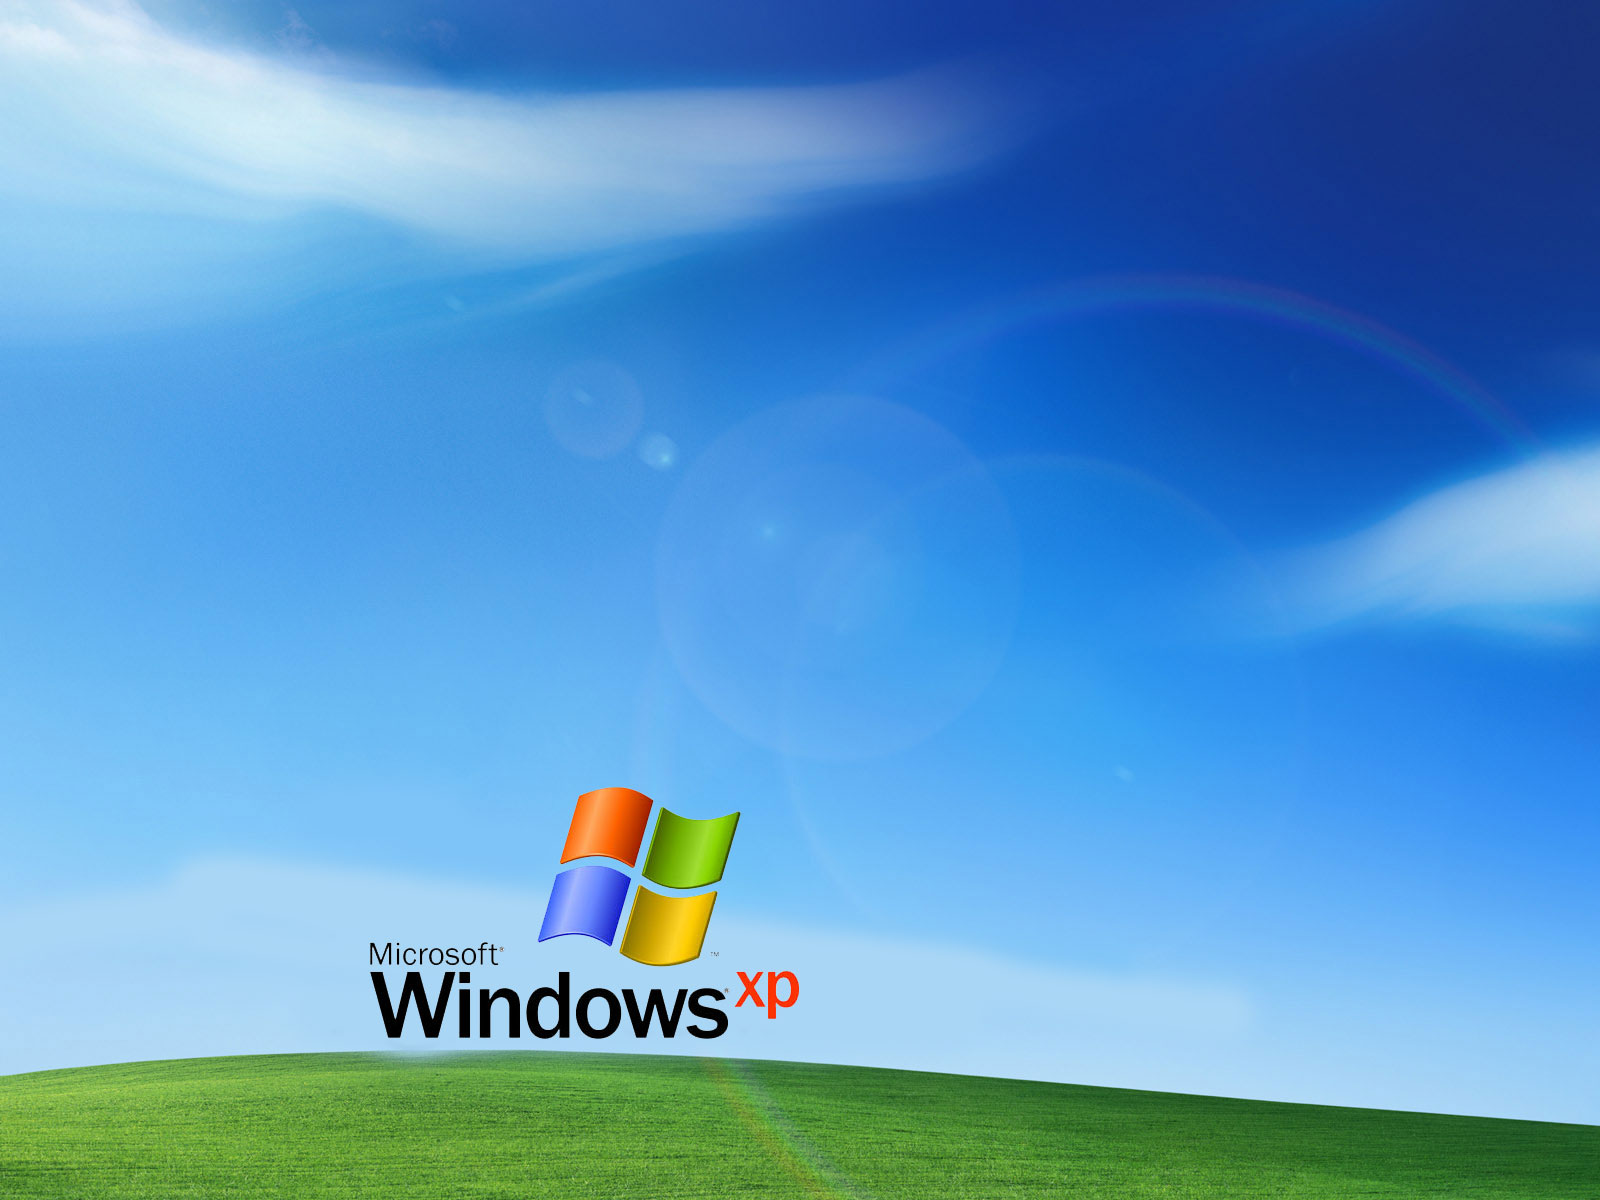 Fondos de pantalla para Windows XP - FondosMil